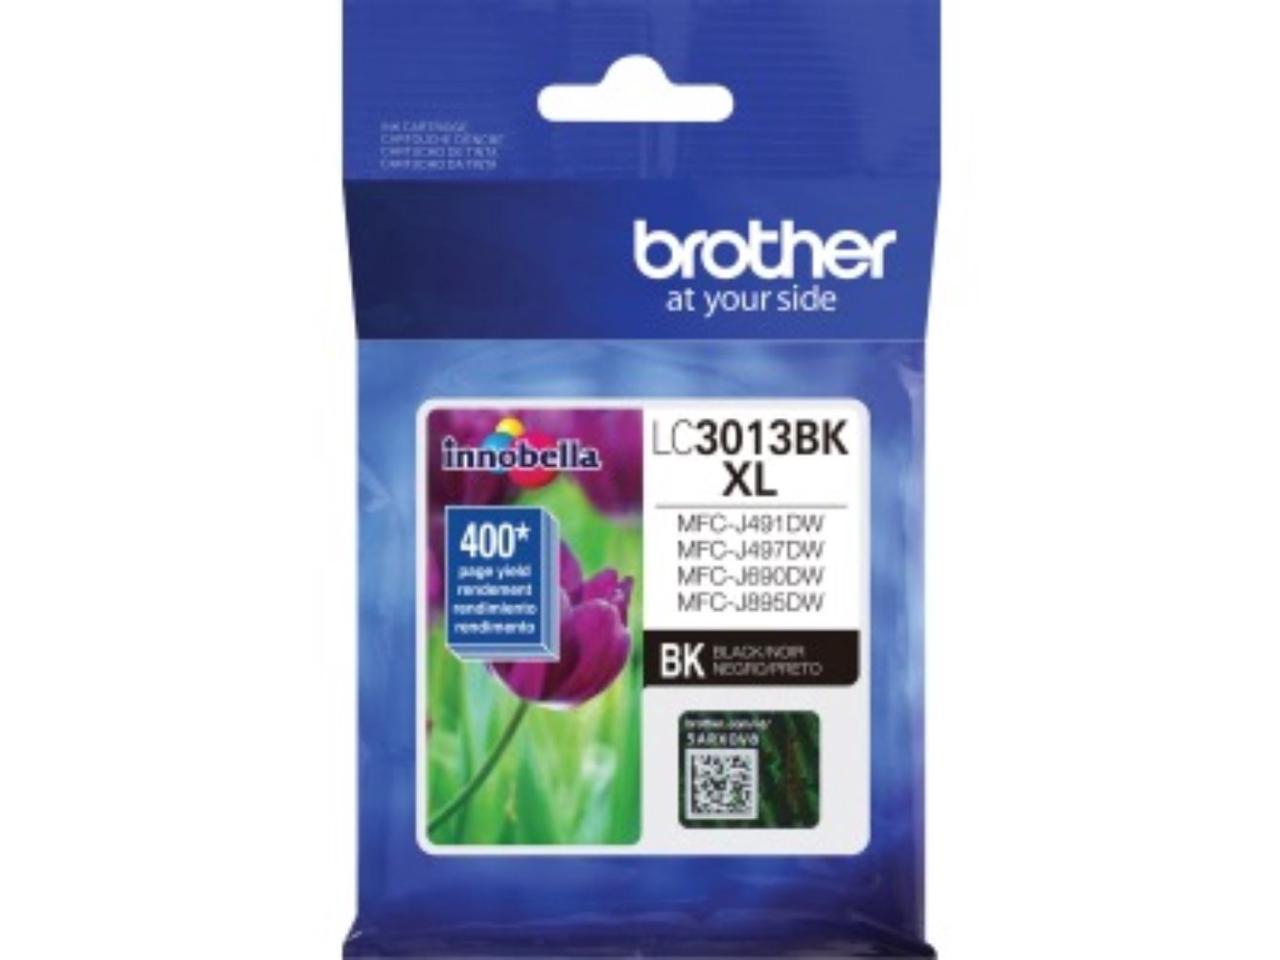 Brother LC3013BK Original Ink Cartridge Single Pack - Black - High Yield